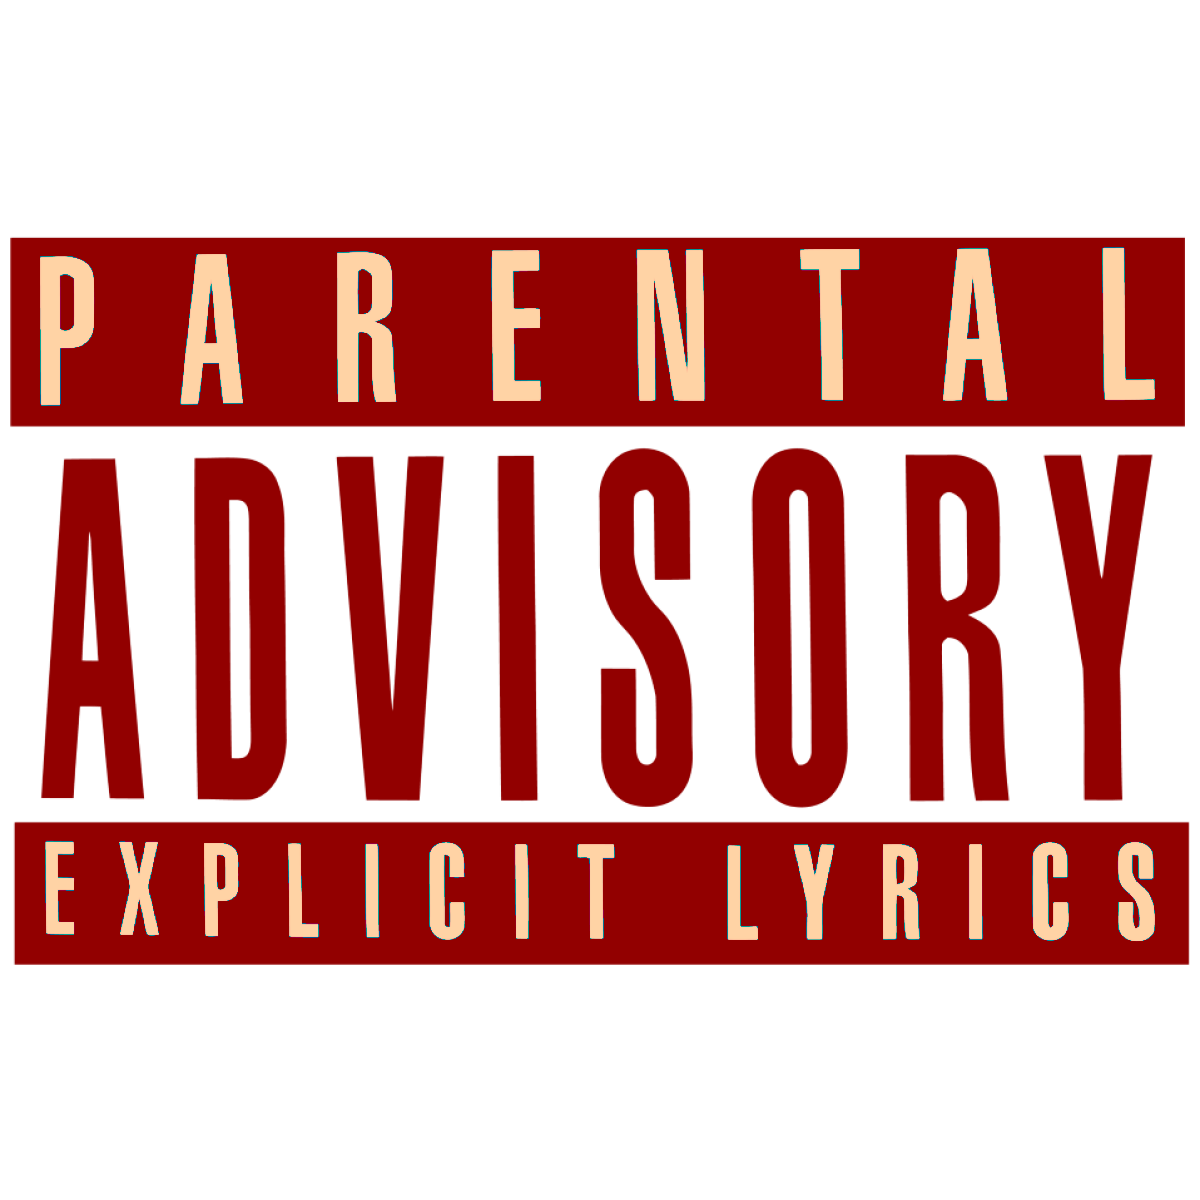 Parental advisory png. Парентал Адвизори. Логотип Advisory. Parental Advisory. Адвисори красный.